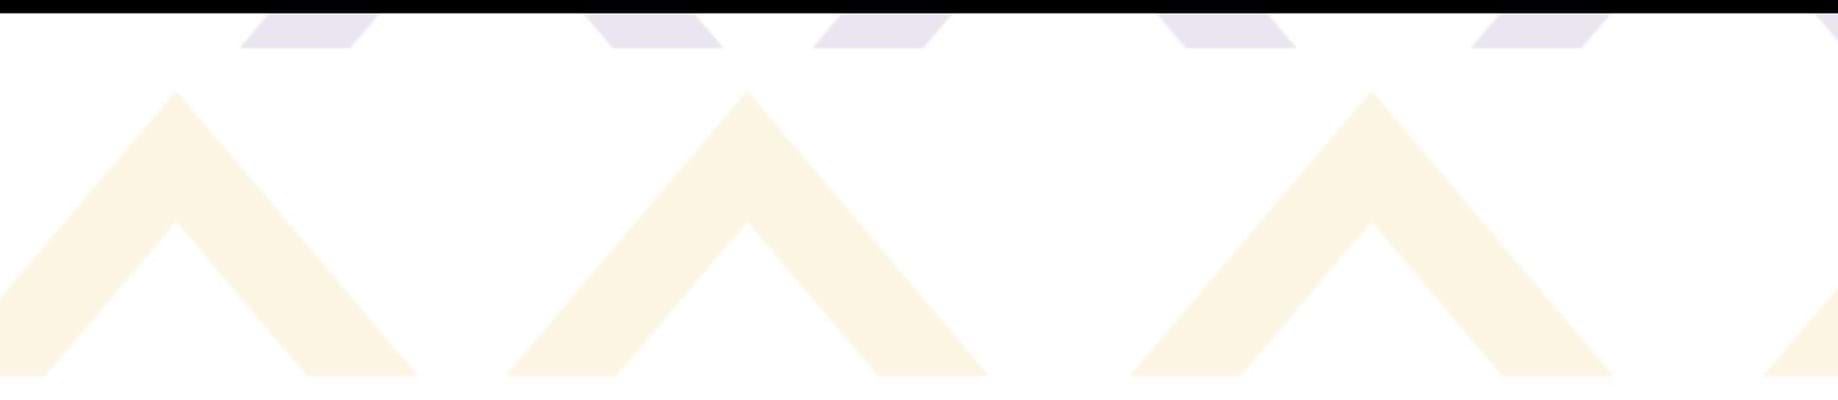 Acunomic GmbH logo